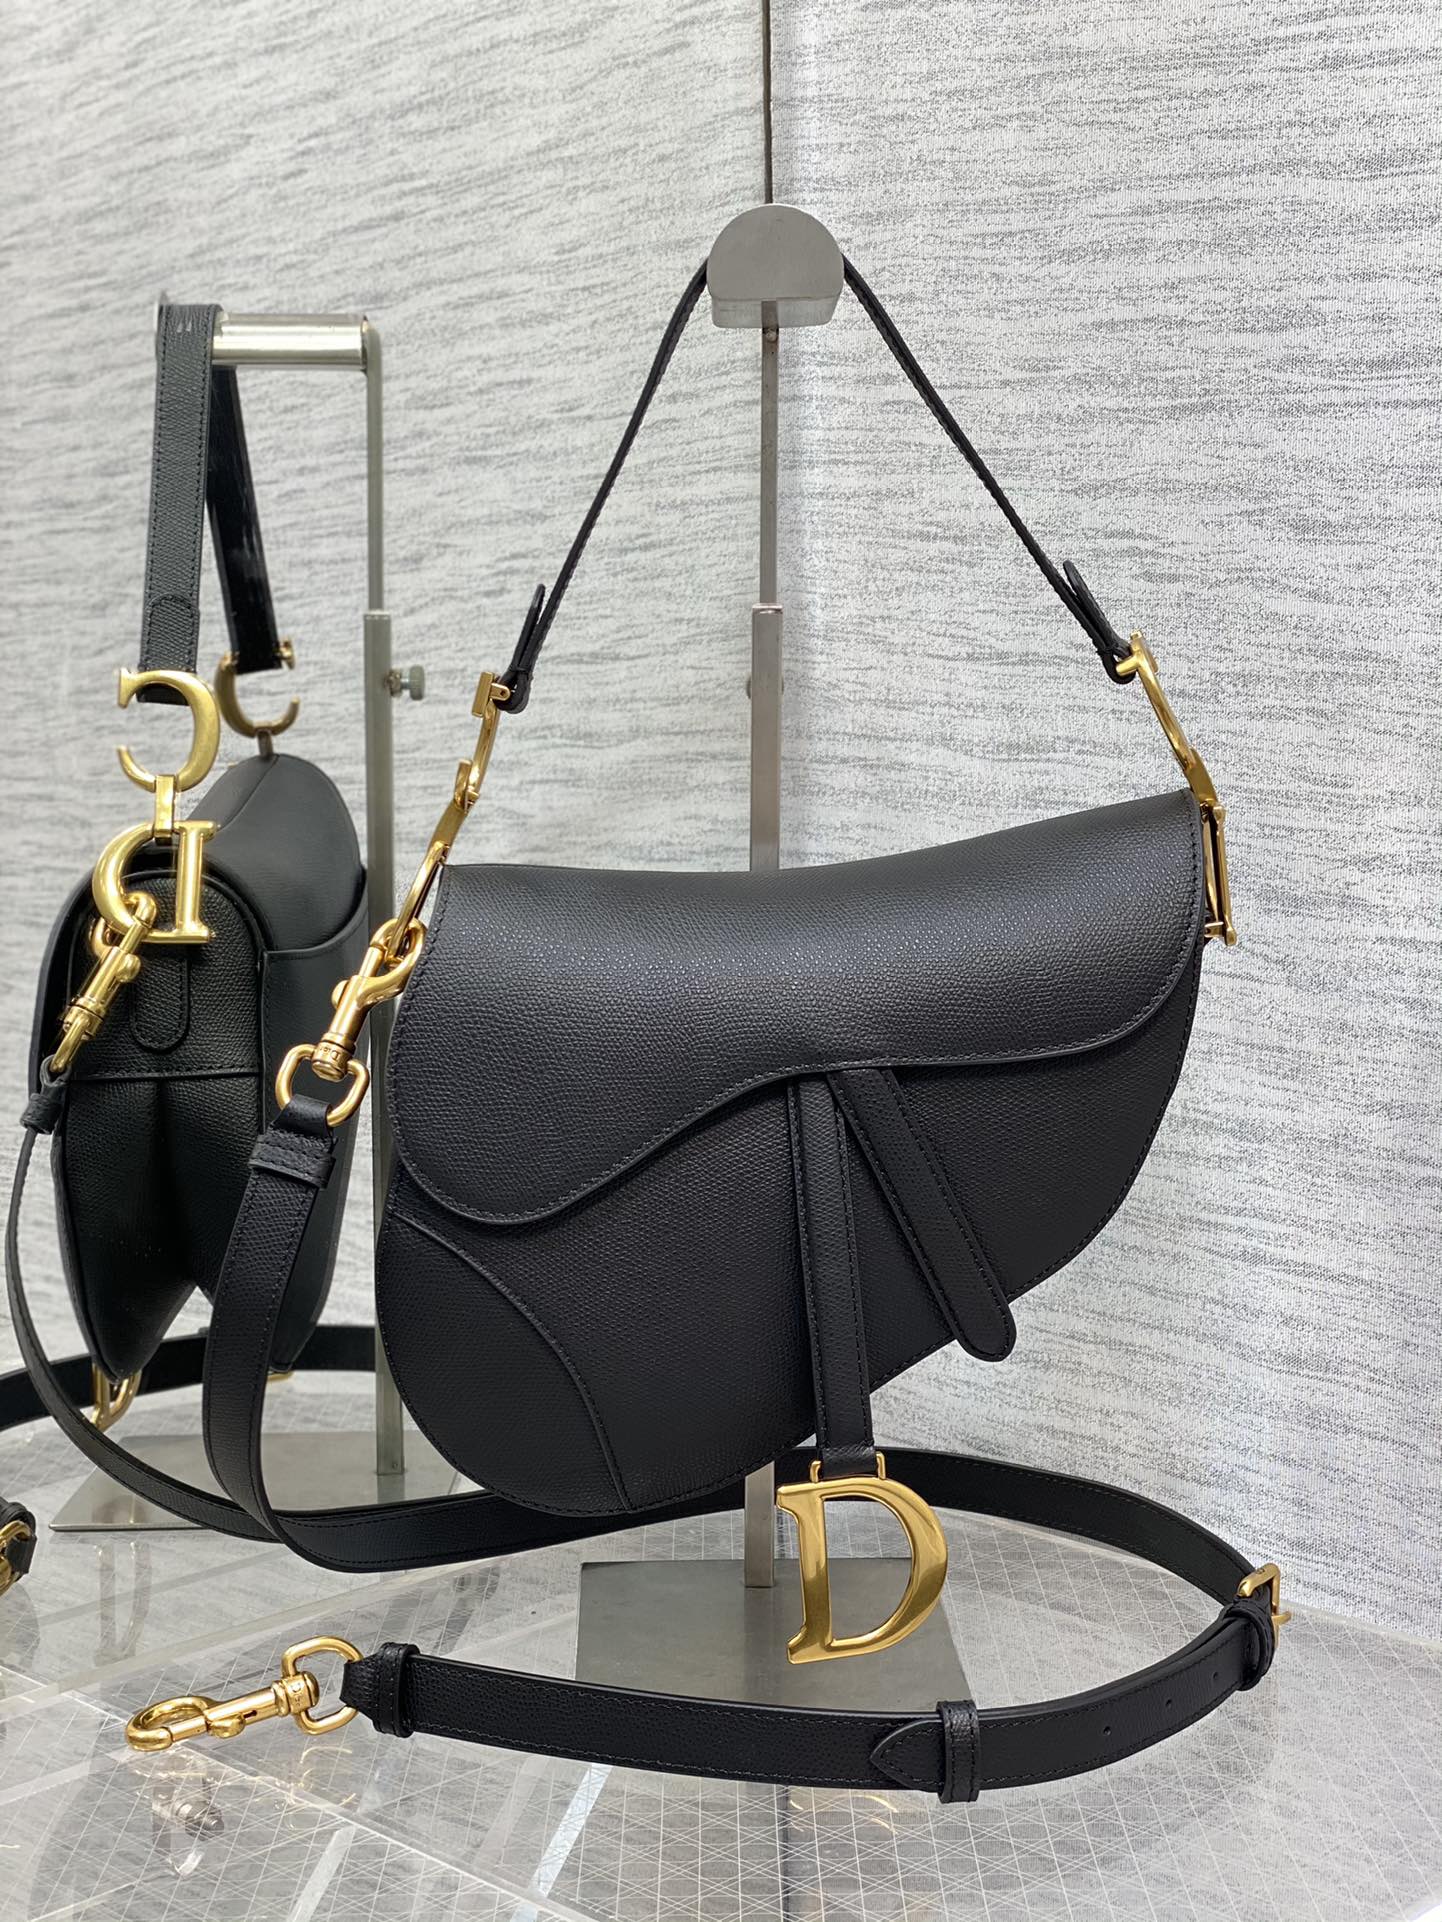 A Review of Dior Saddle Bag